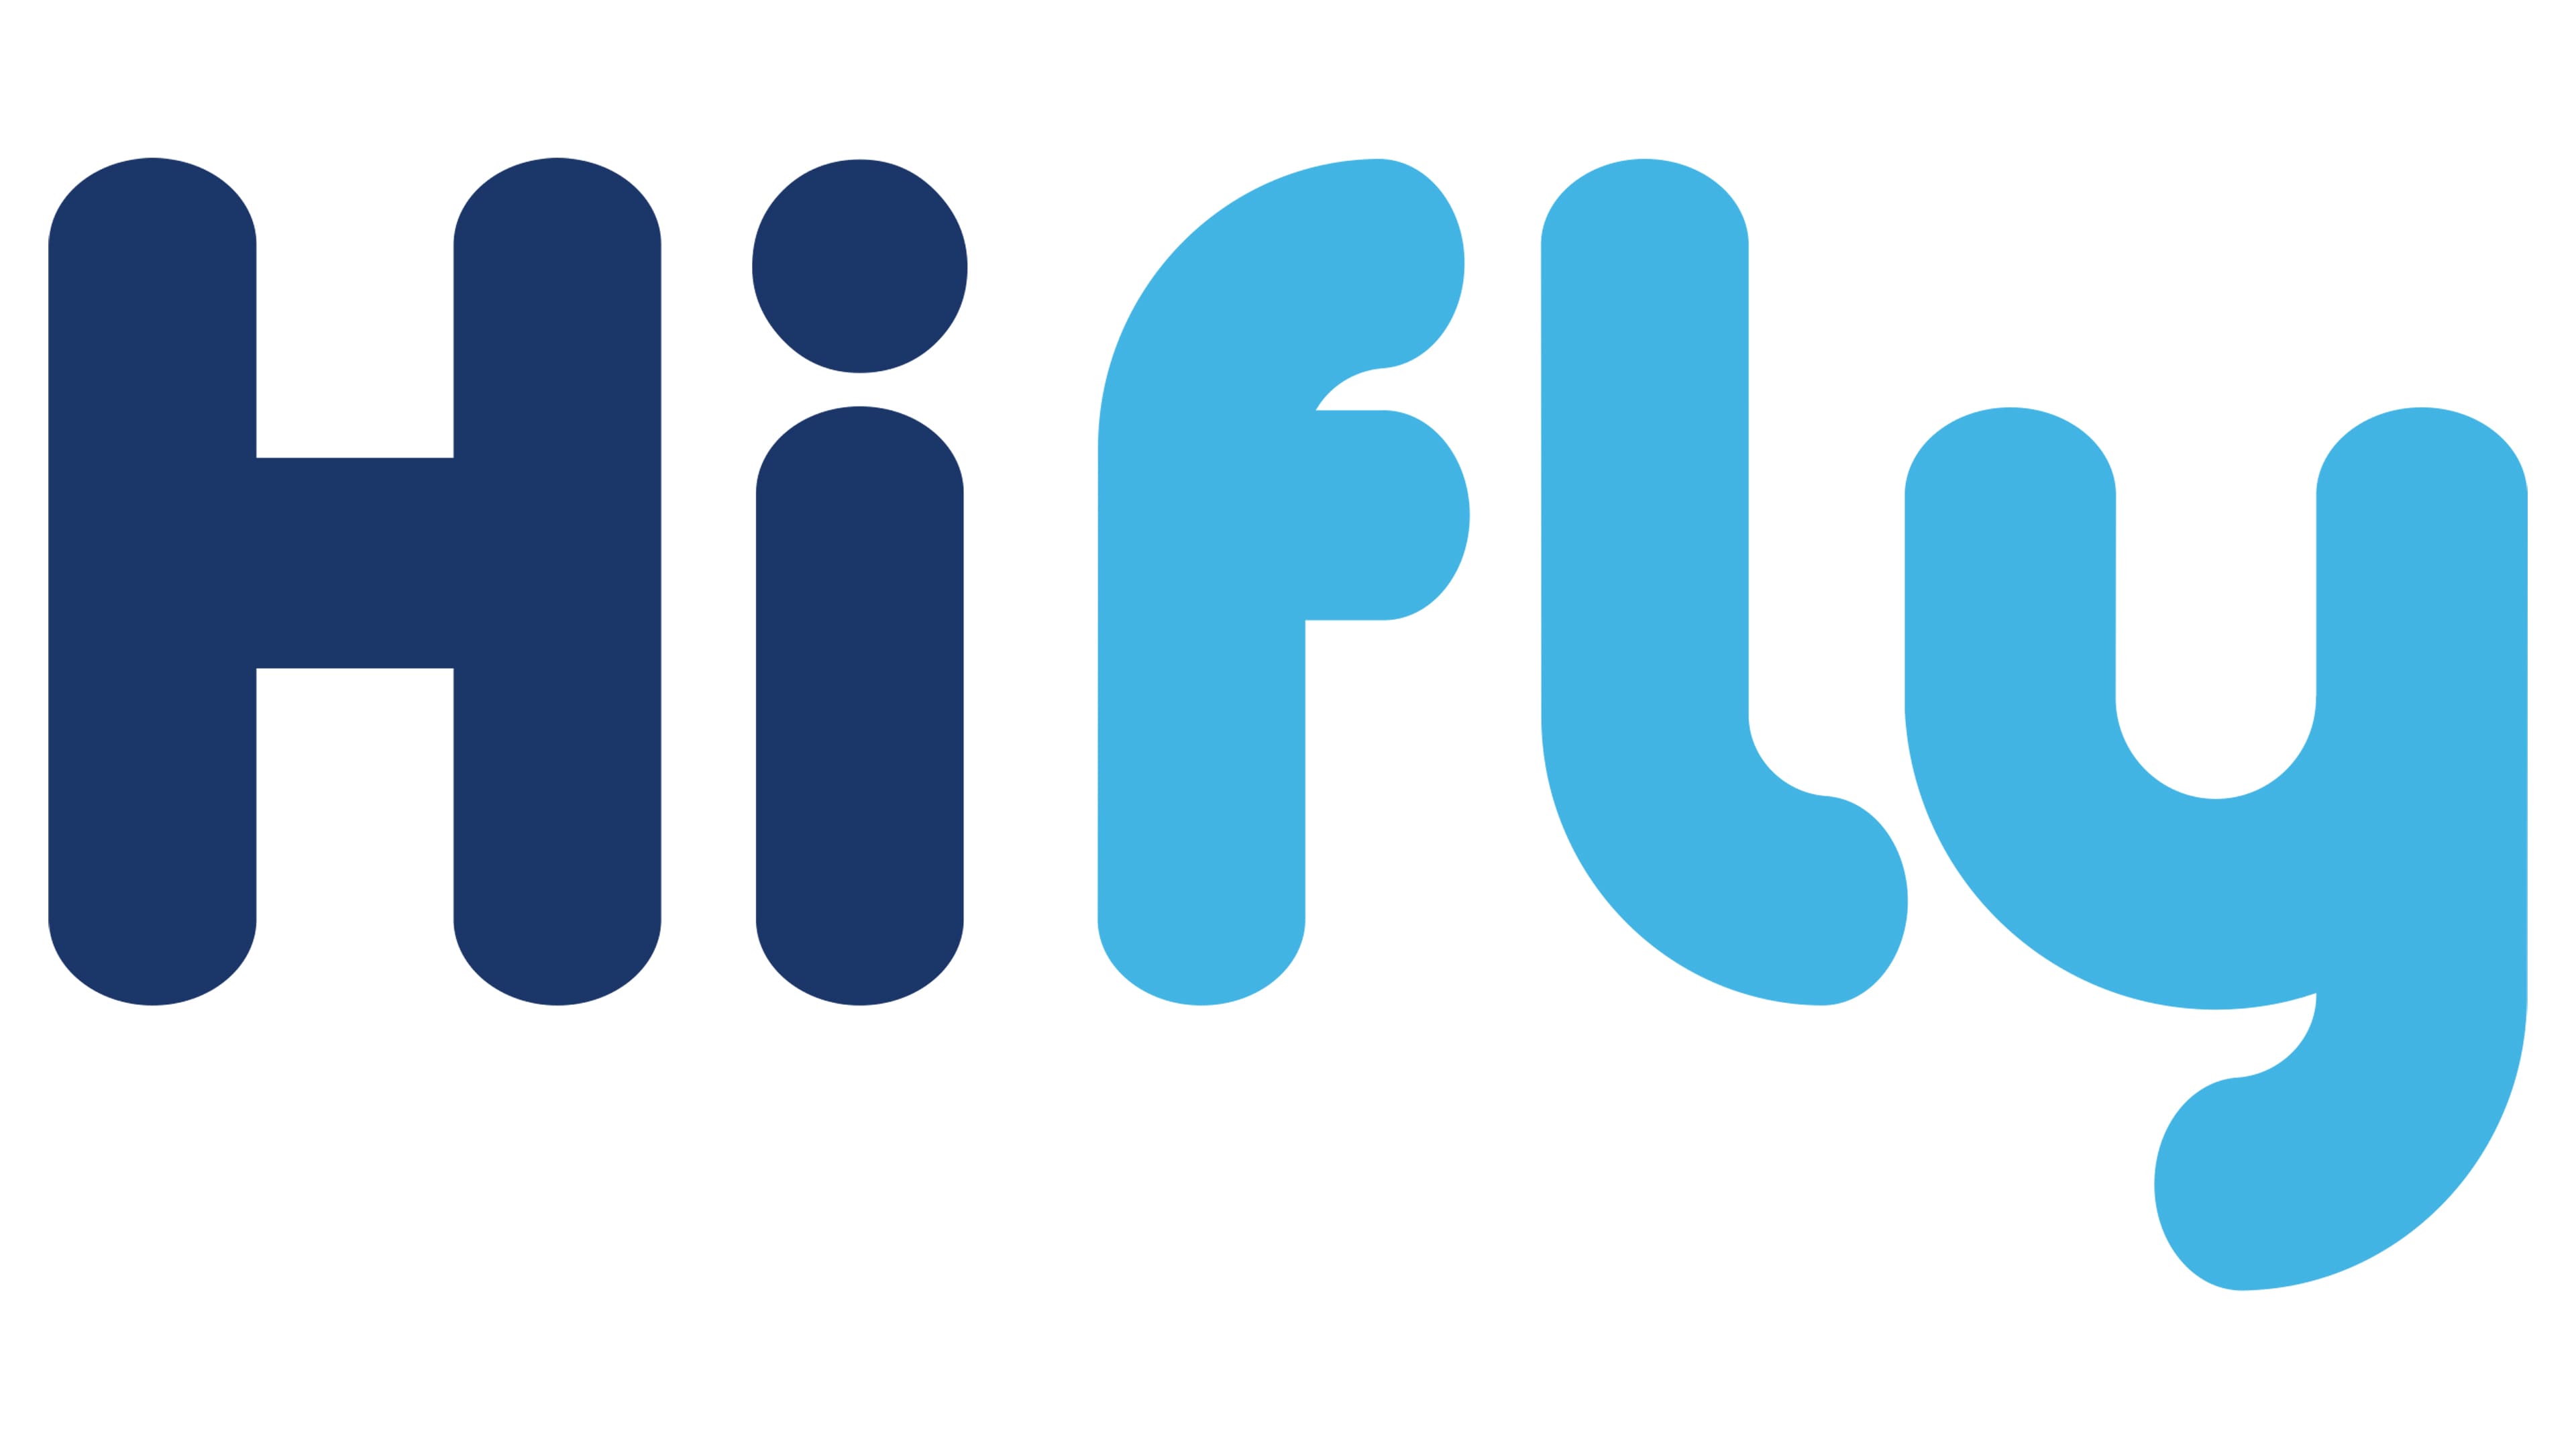 Fly high 5. Летай логотип. Hifly logo. Hiphi эмблема. Hostfly логотип.